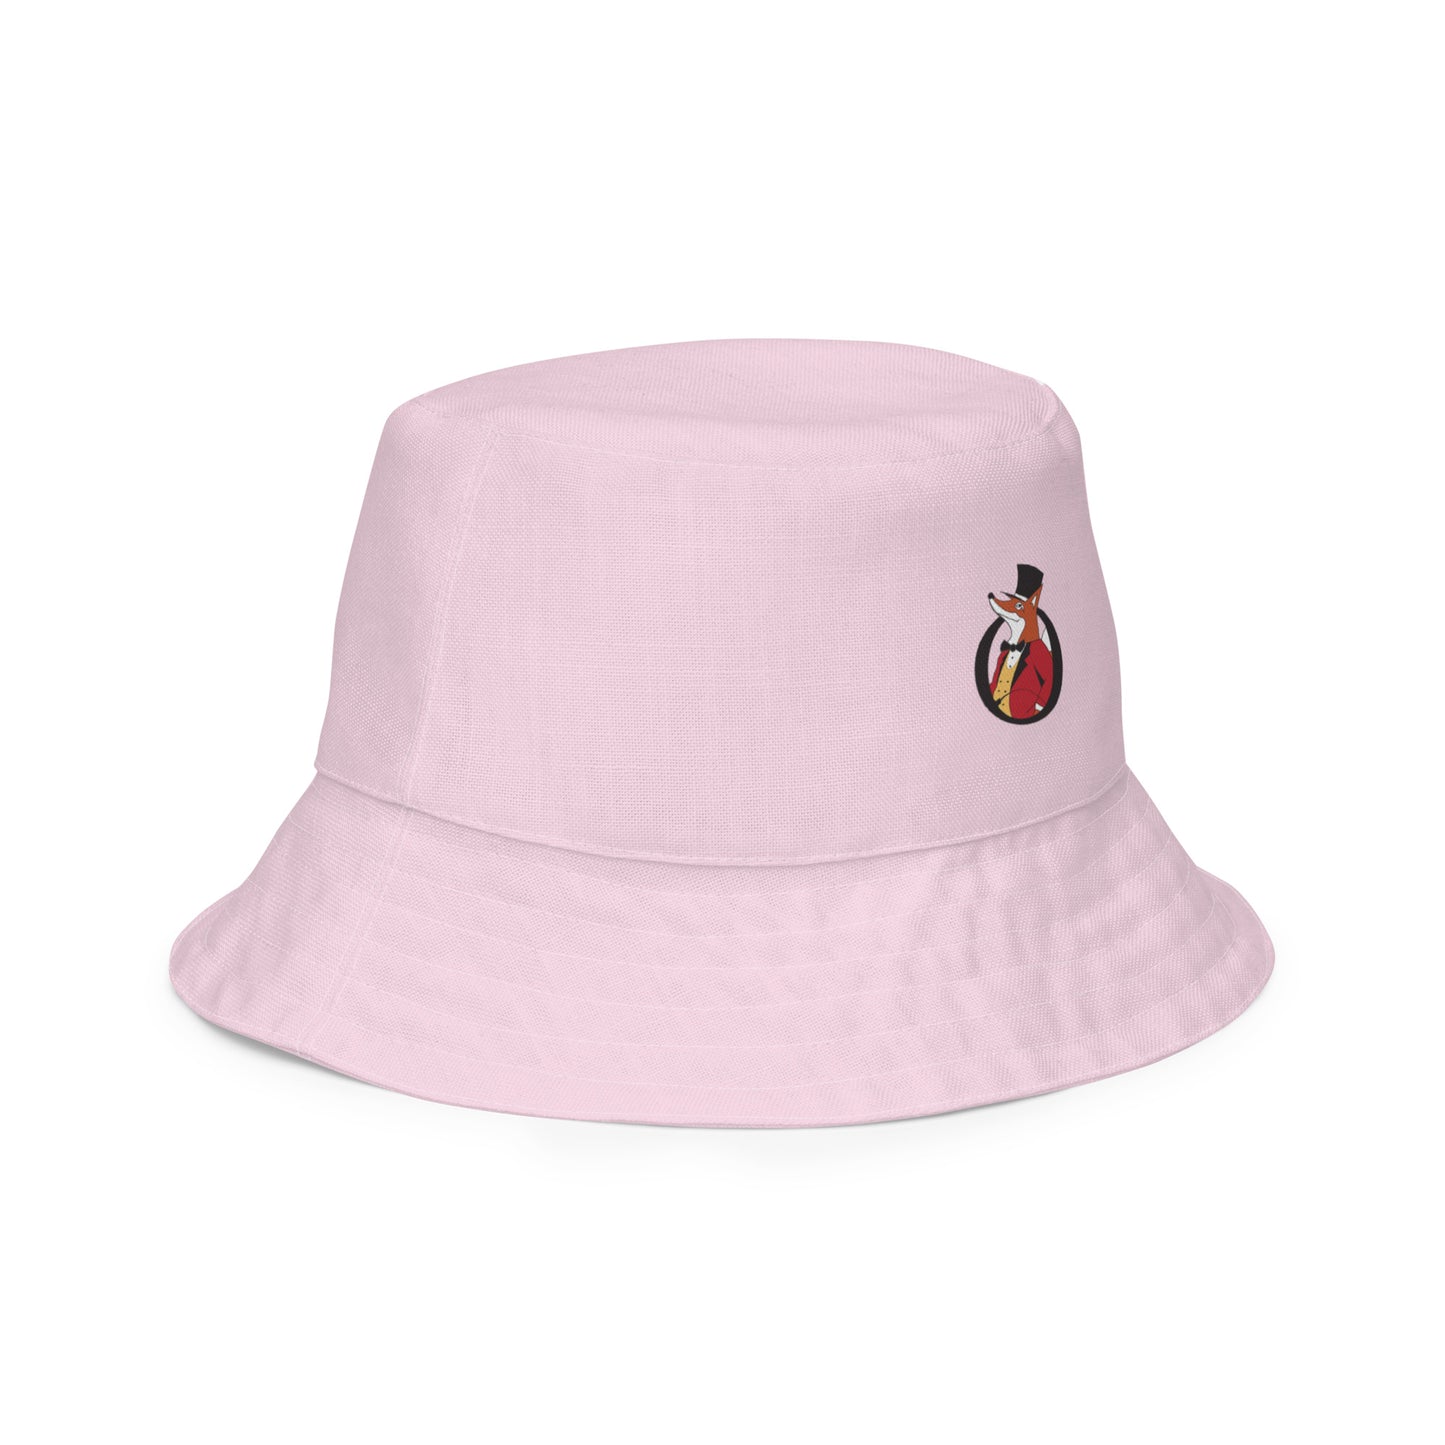 Snooty Fox Art Reversible Bucket Hat - Vanilla Cream / Mexico Pink